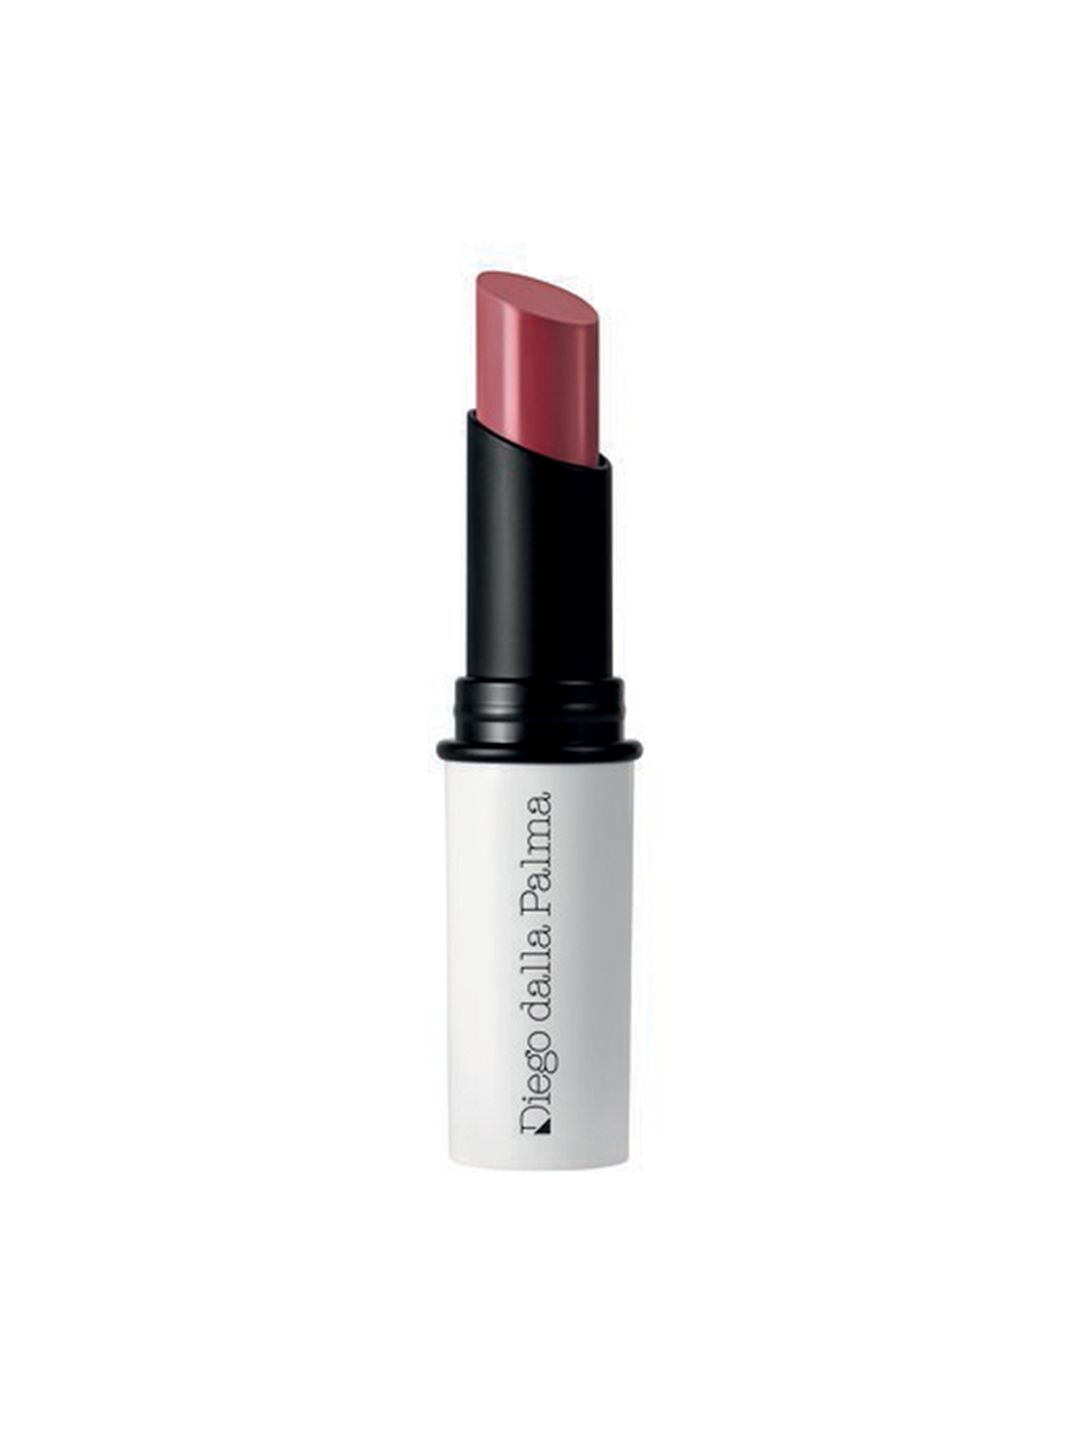 Diego dalla Palma MILANO Semitransparent Shiny Lipstick with Hyaluronic Filler - Mauve 149 Price in India